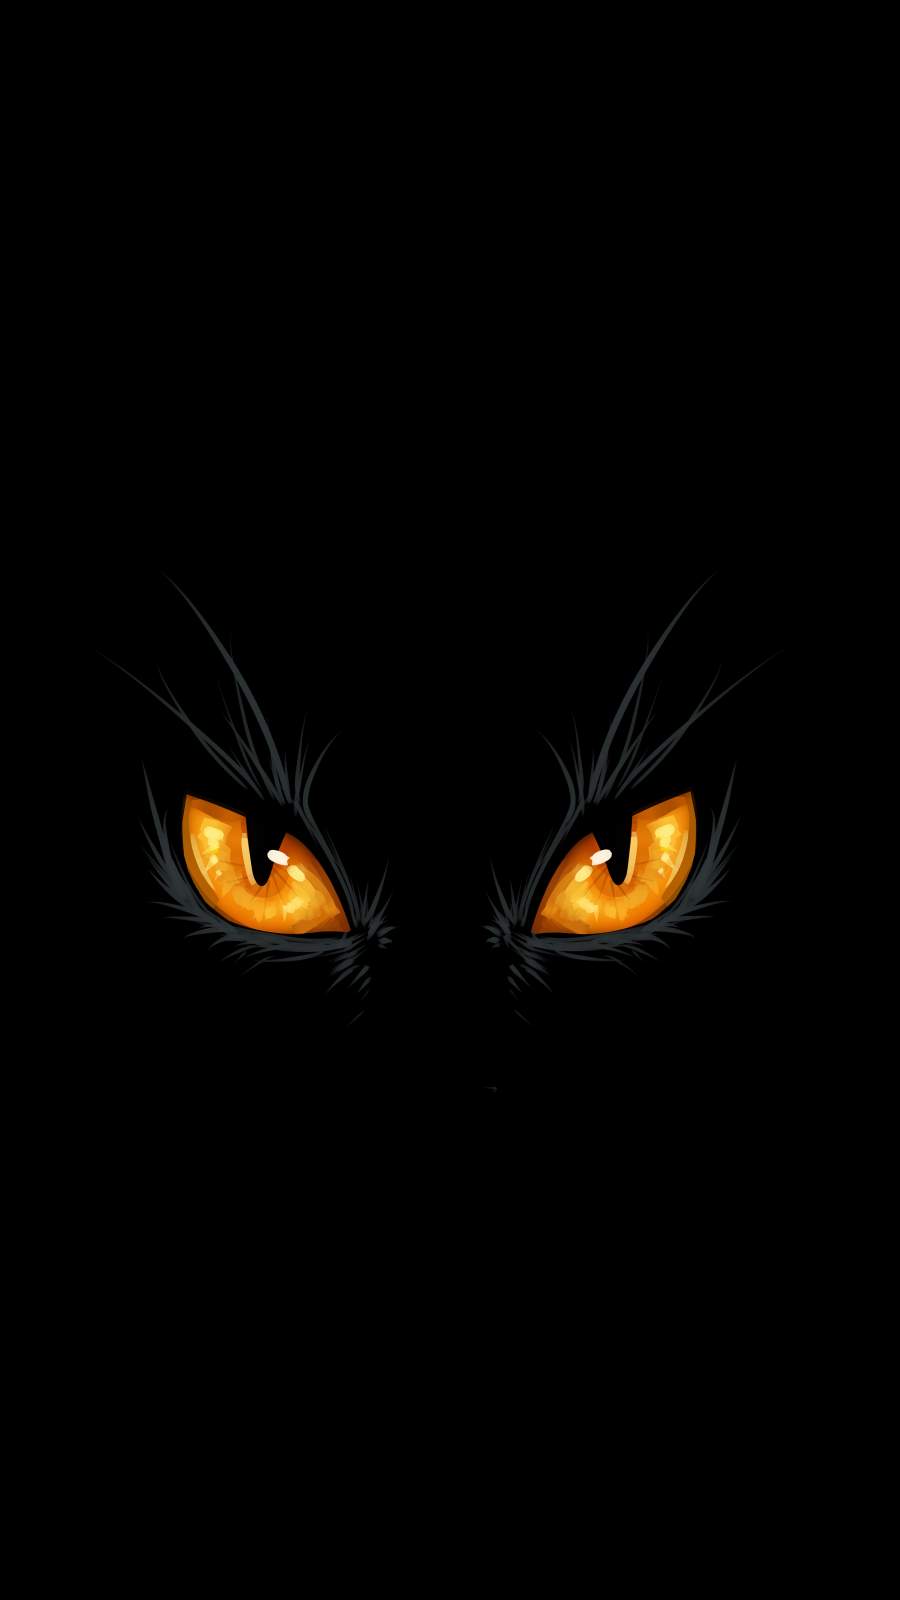 Black Cat Eyes iPhone Wallpaper